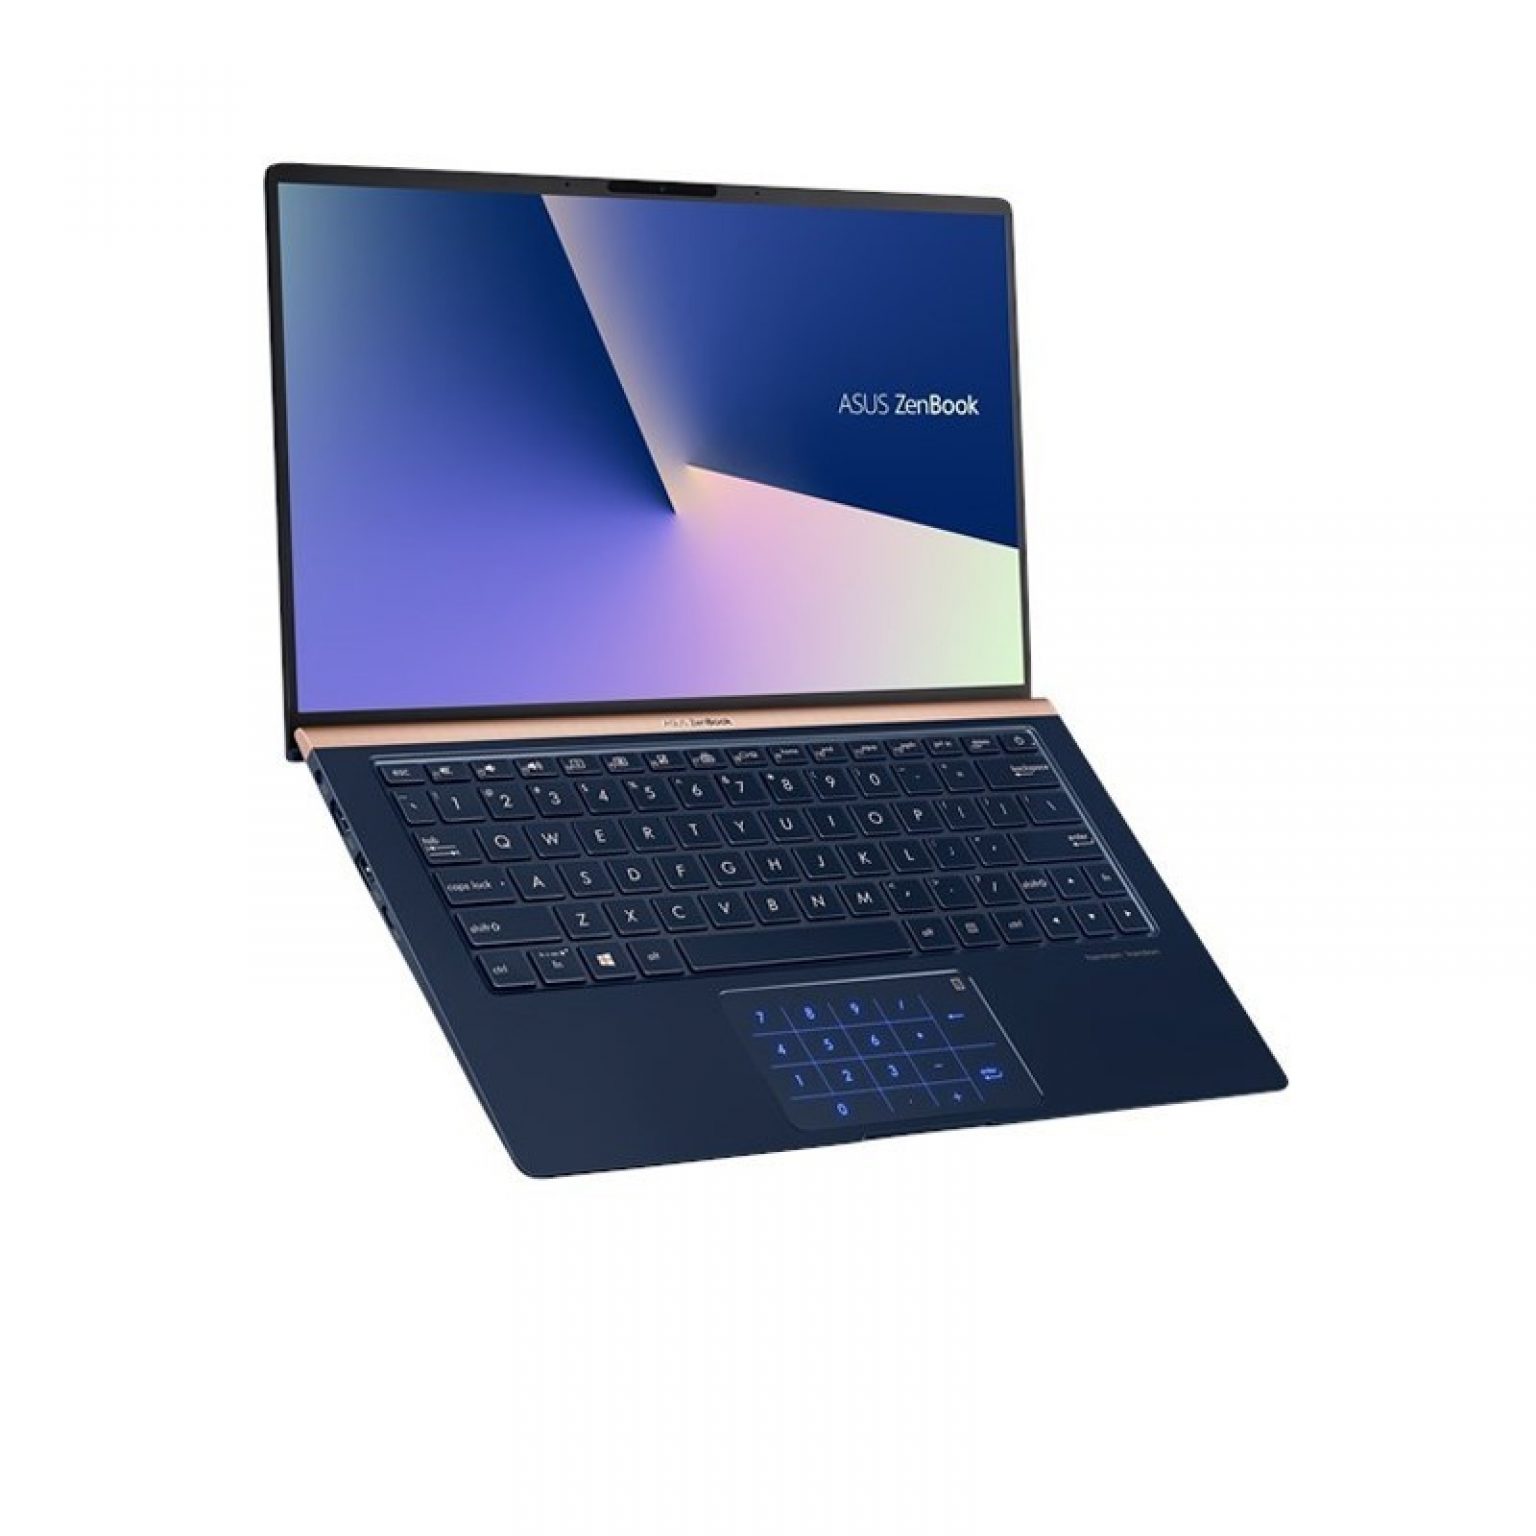 ASUS - ZenBook UX333FA-A5811T (i5-8265U/8GB RAM/512GB SSD/Win10SL/Royal Blue)